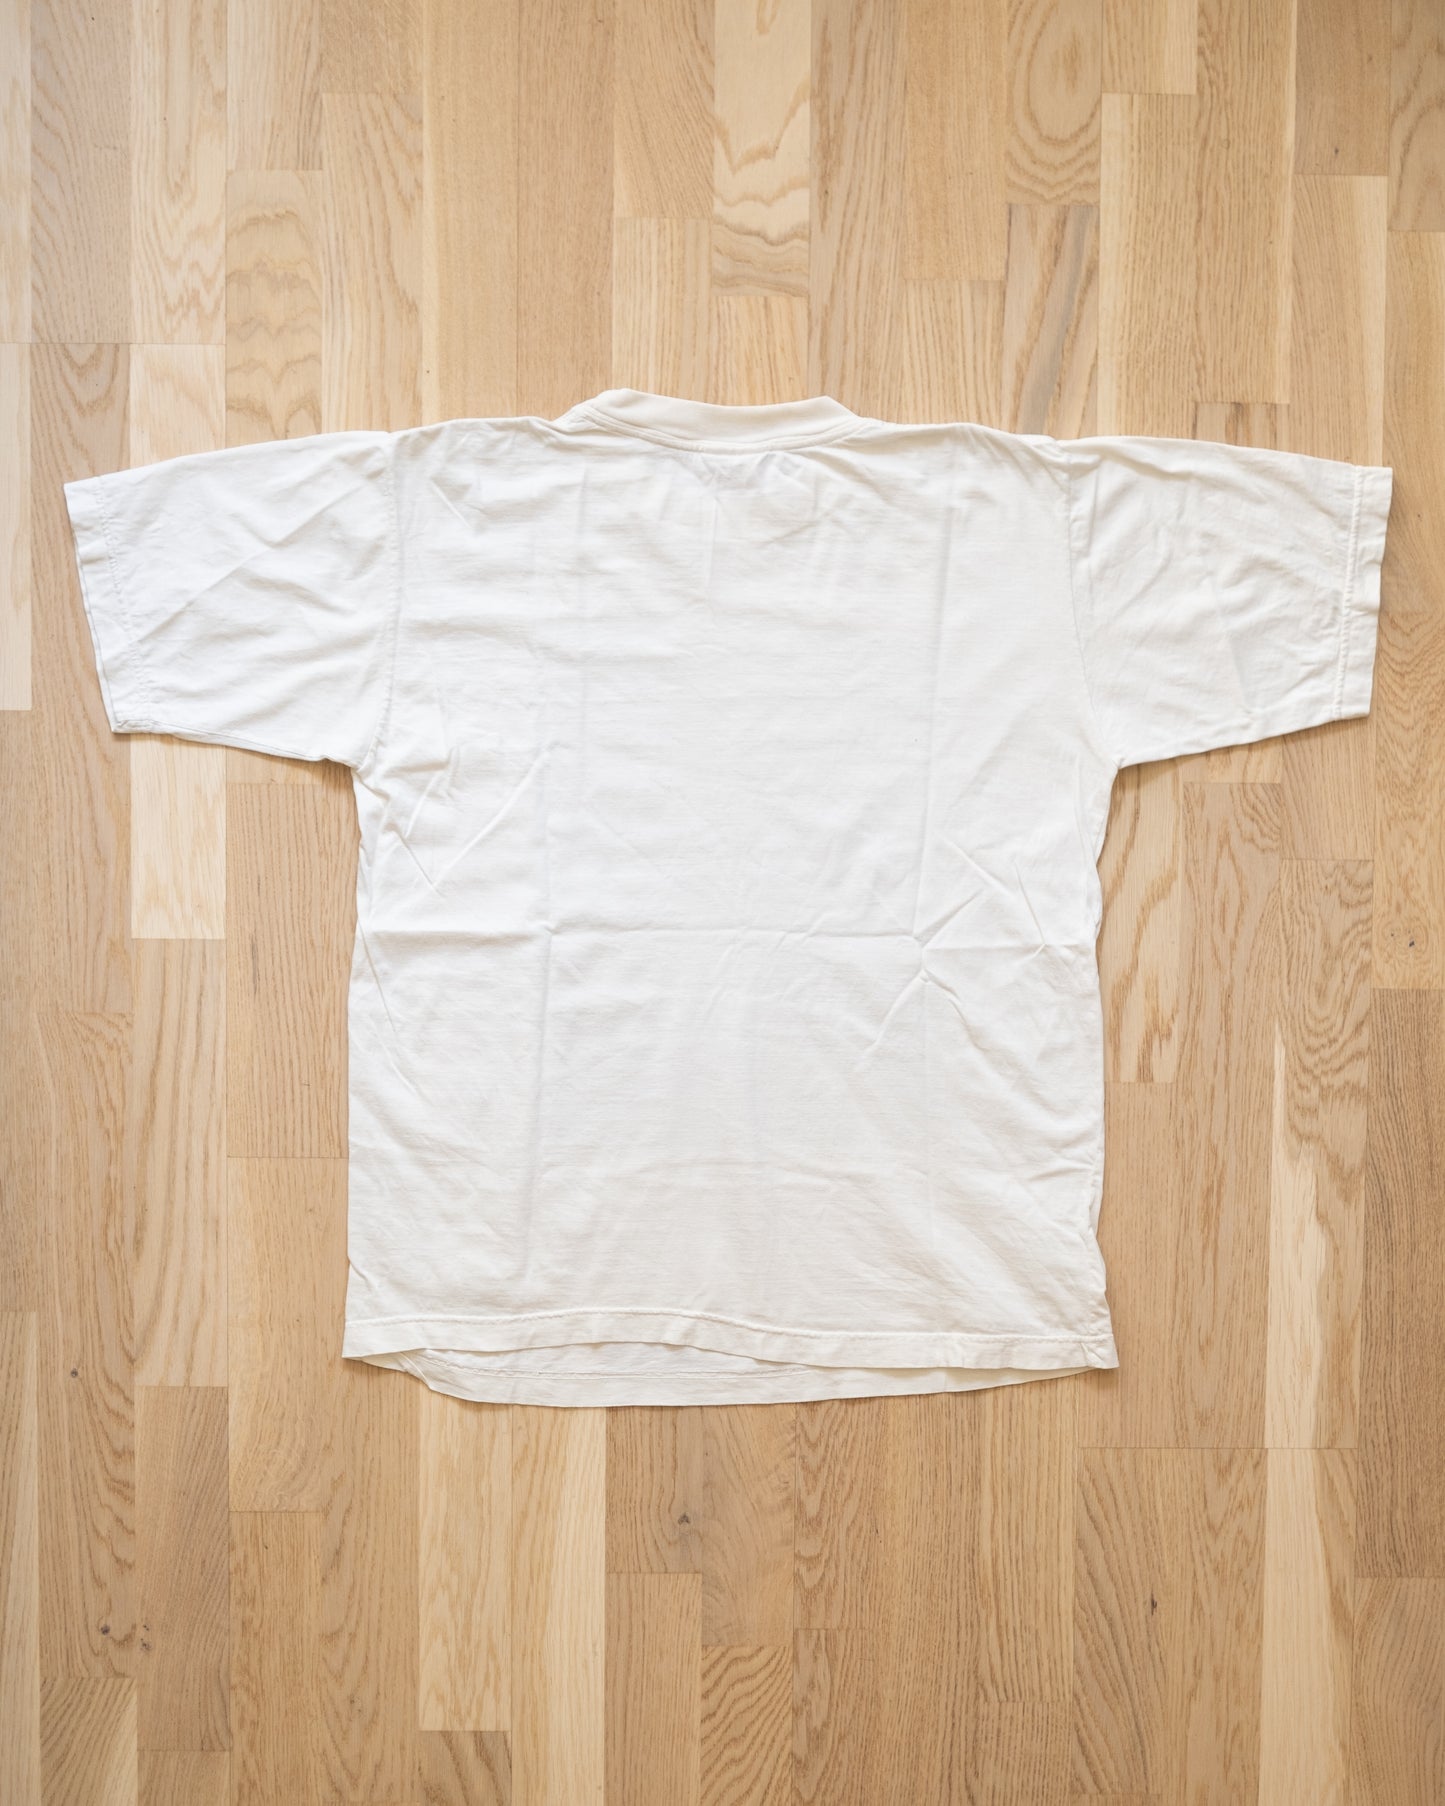 Natura Ecowear x Tony Sandin Vintage Photo T-Shirt Size M